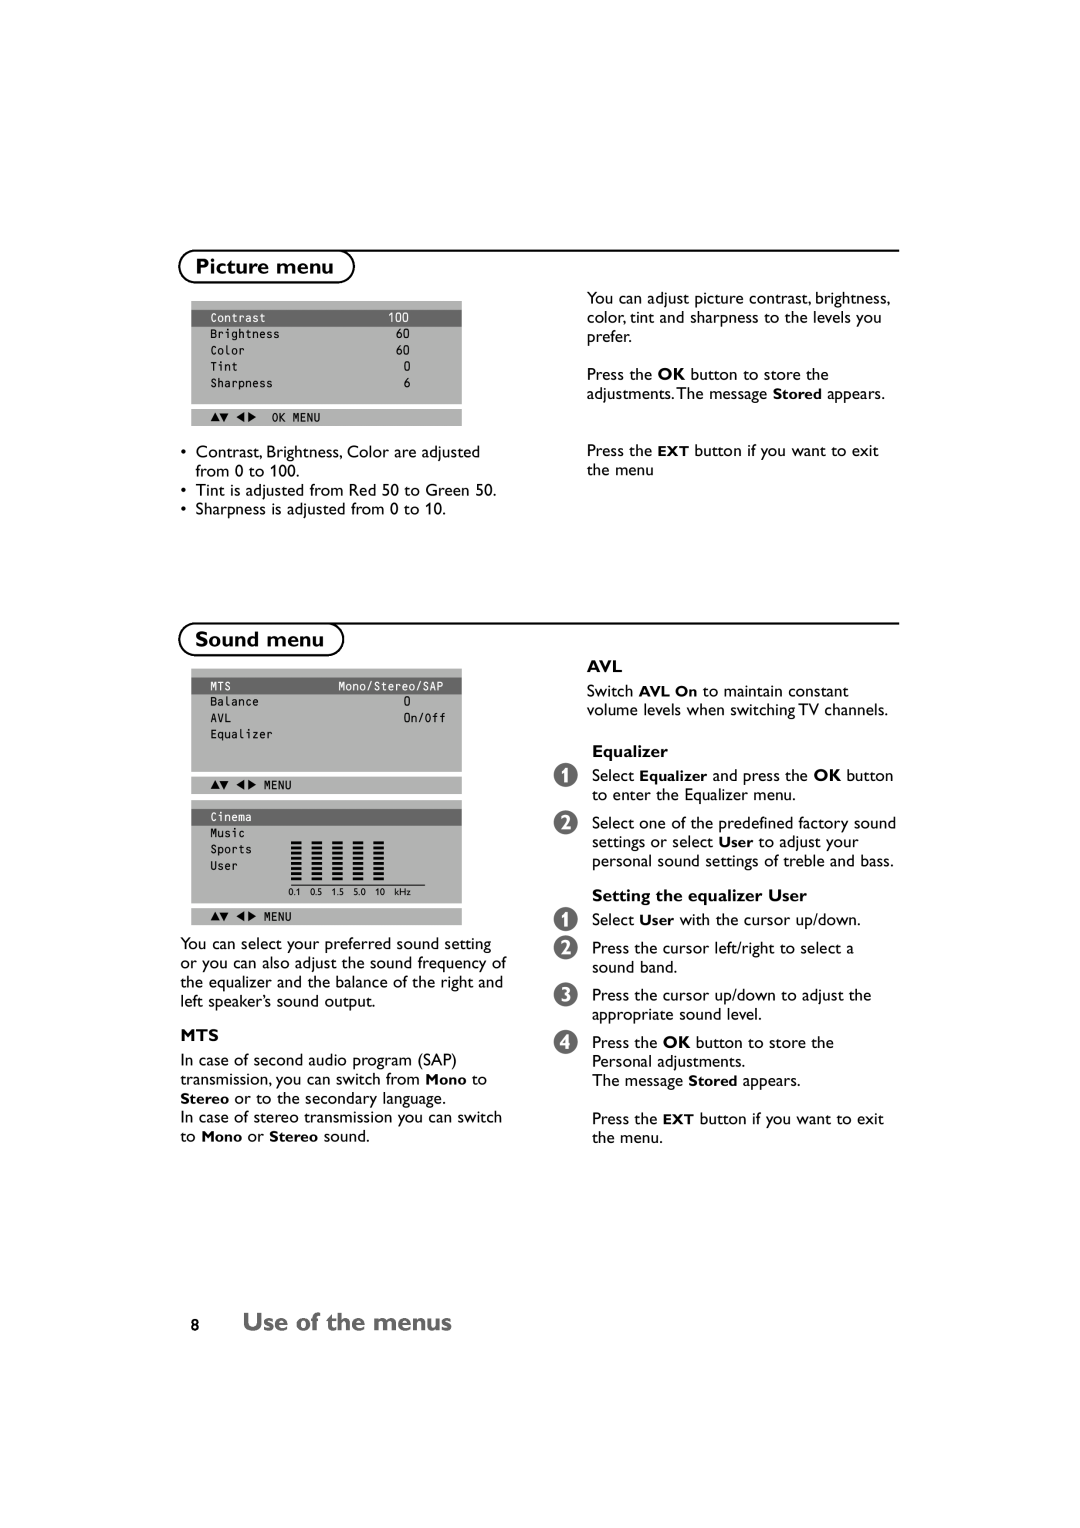 Technicolor - Thomson 15 manual Use of the menus, Picture menu, Sound menu 